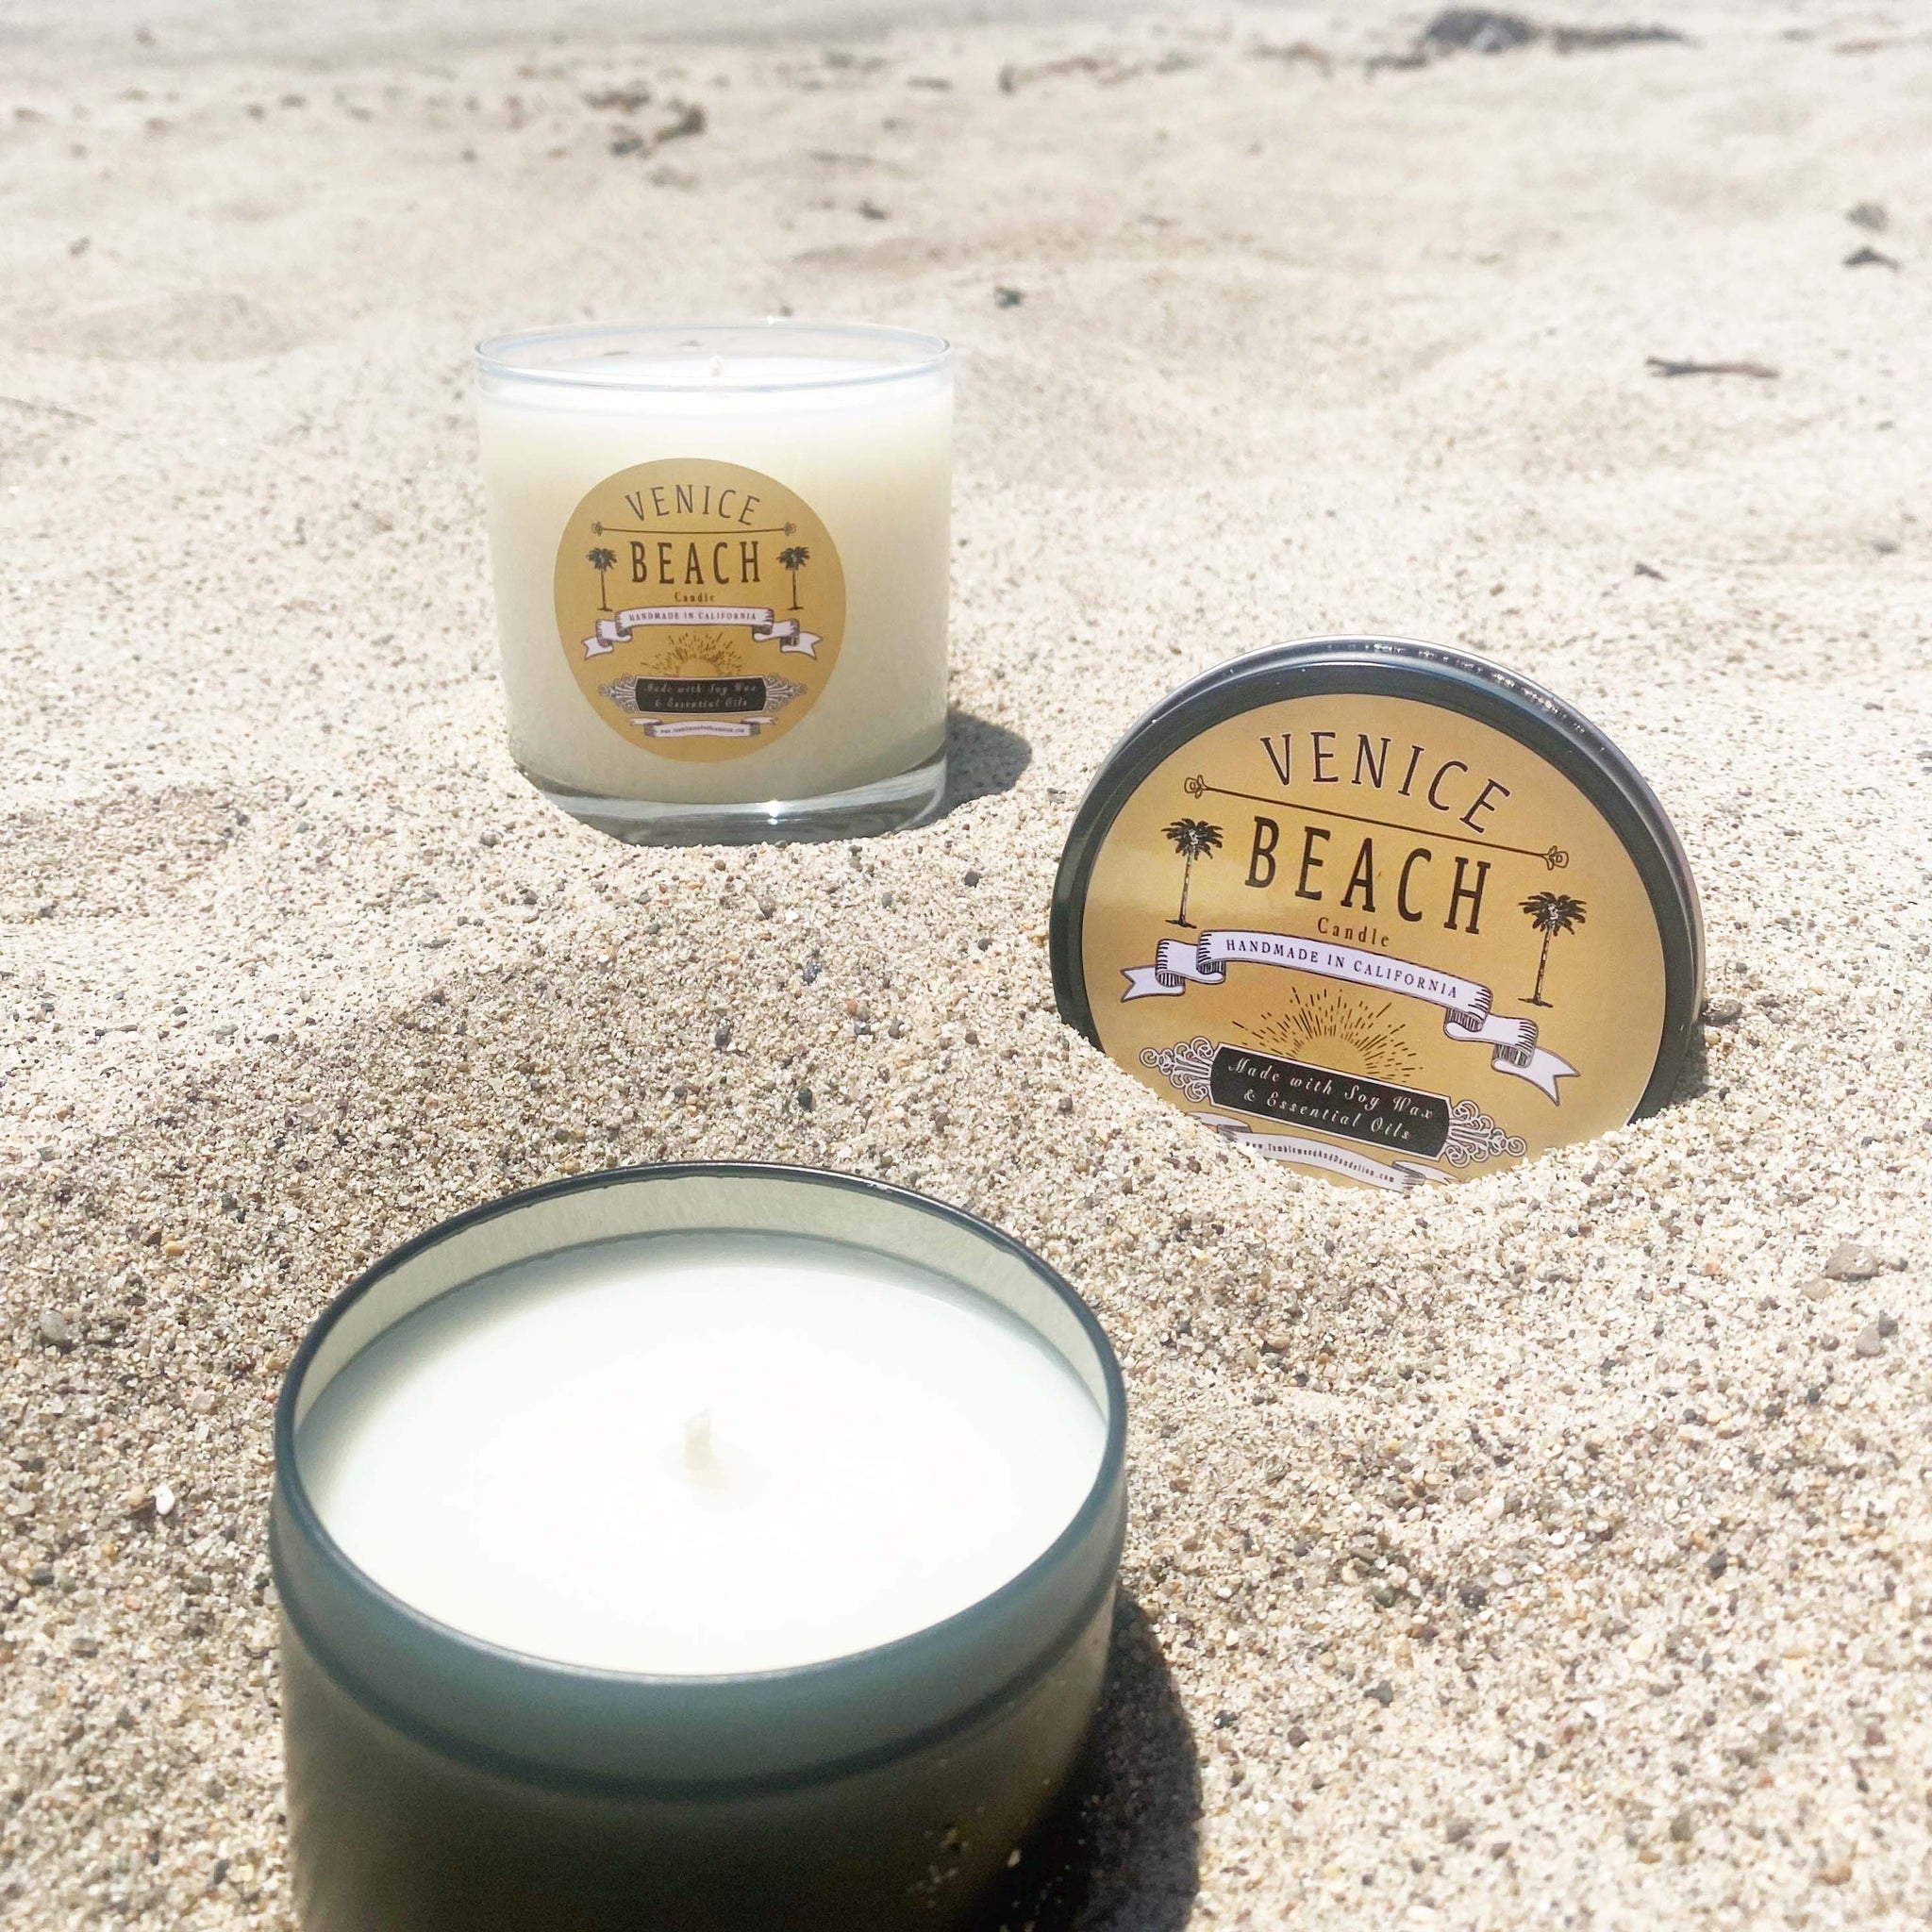 Venice Beach Candle – Tumbleweed & Dandelion LLC